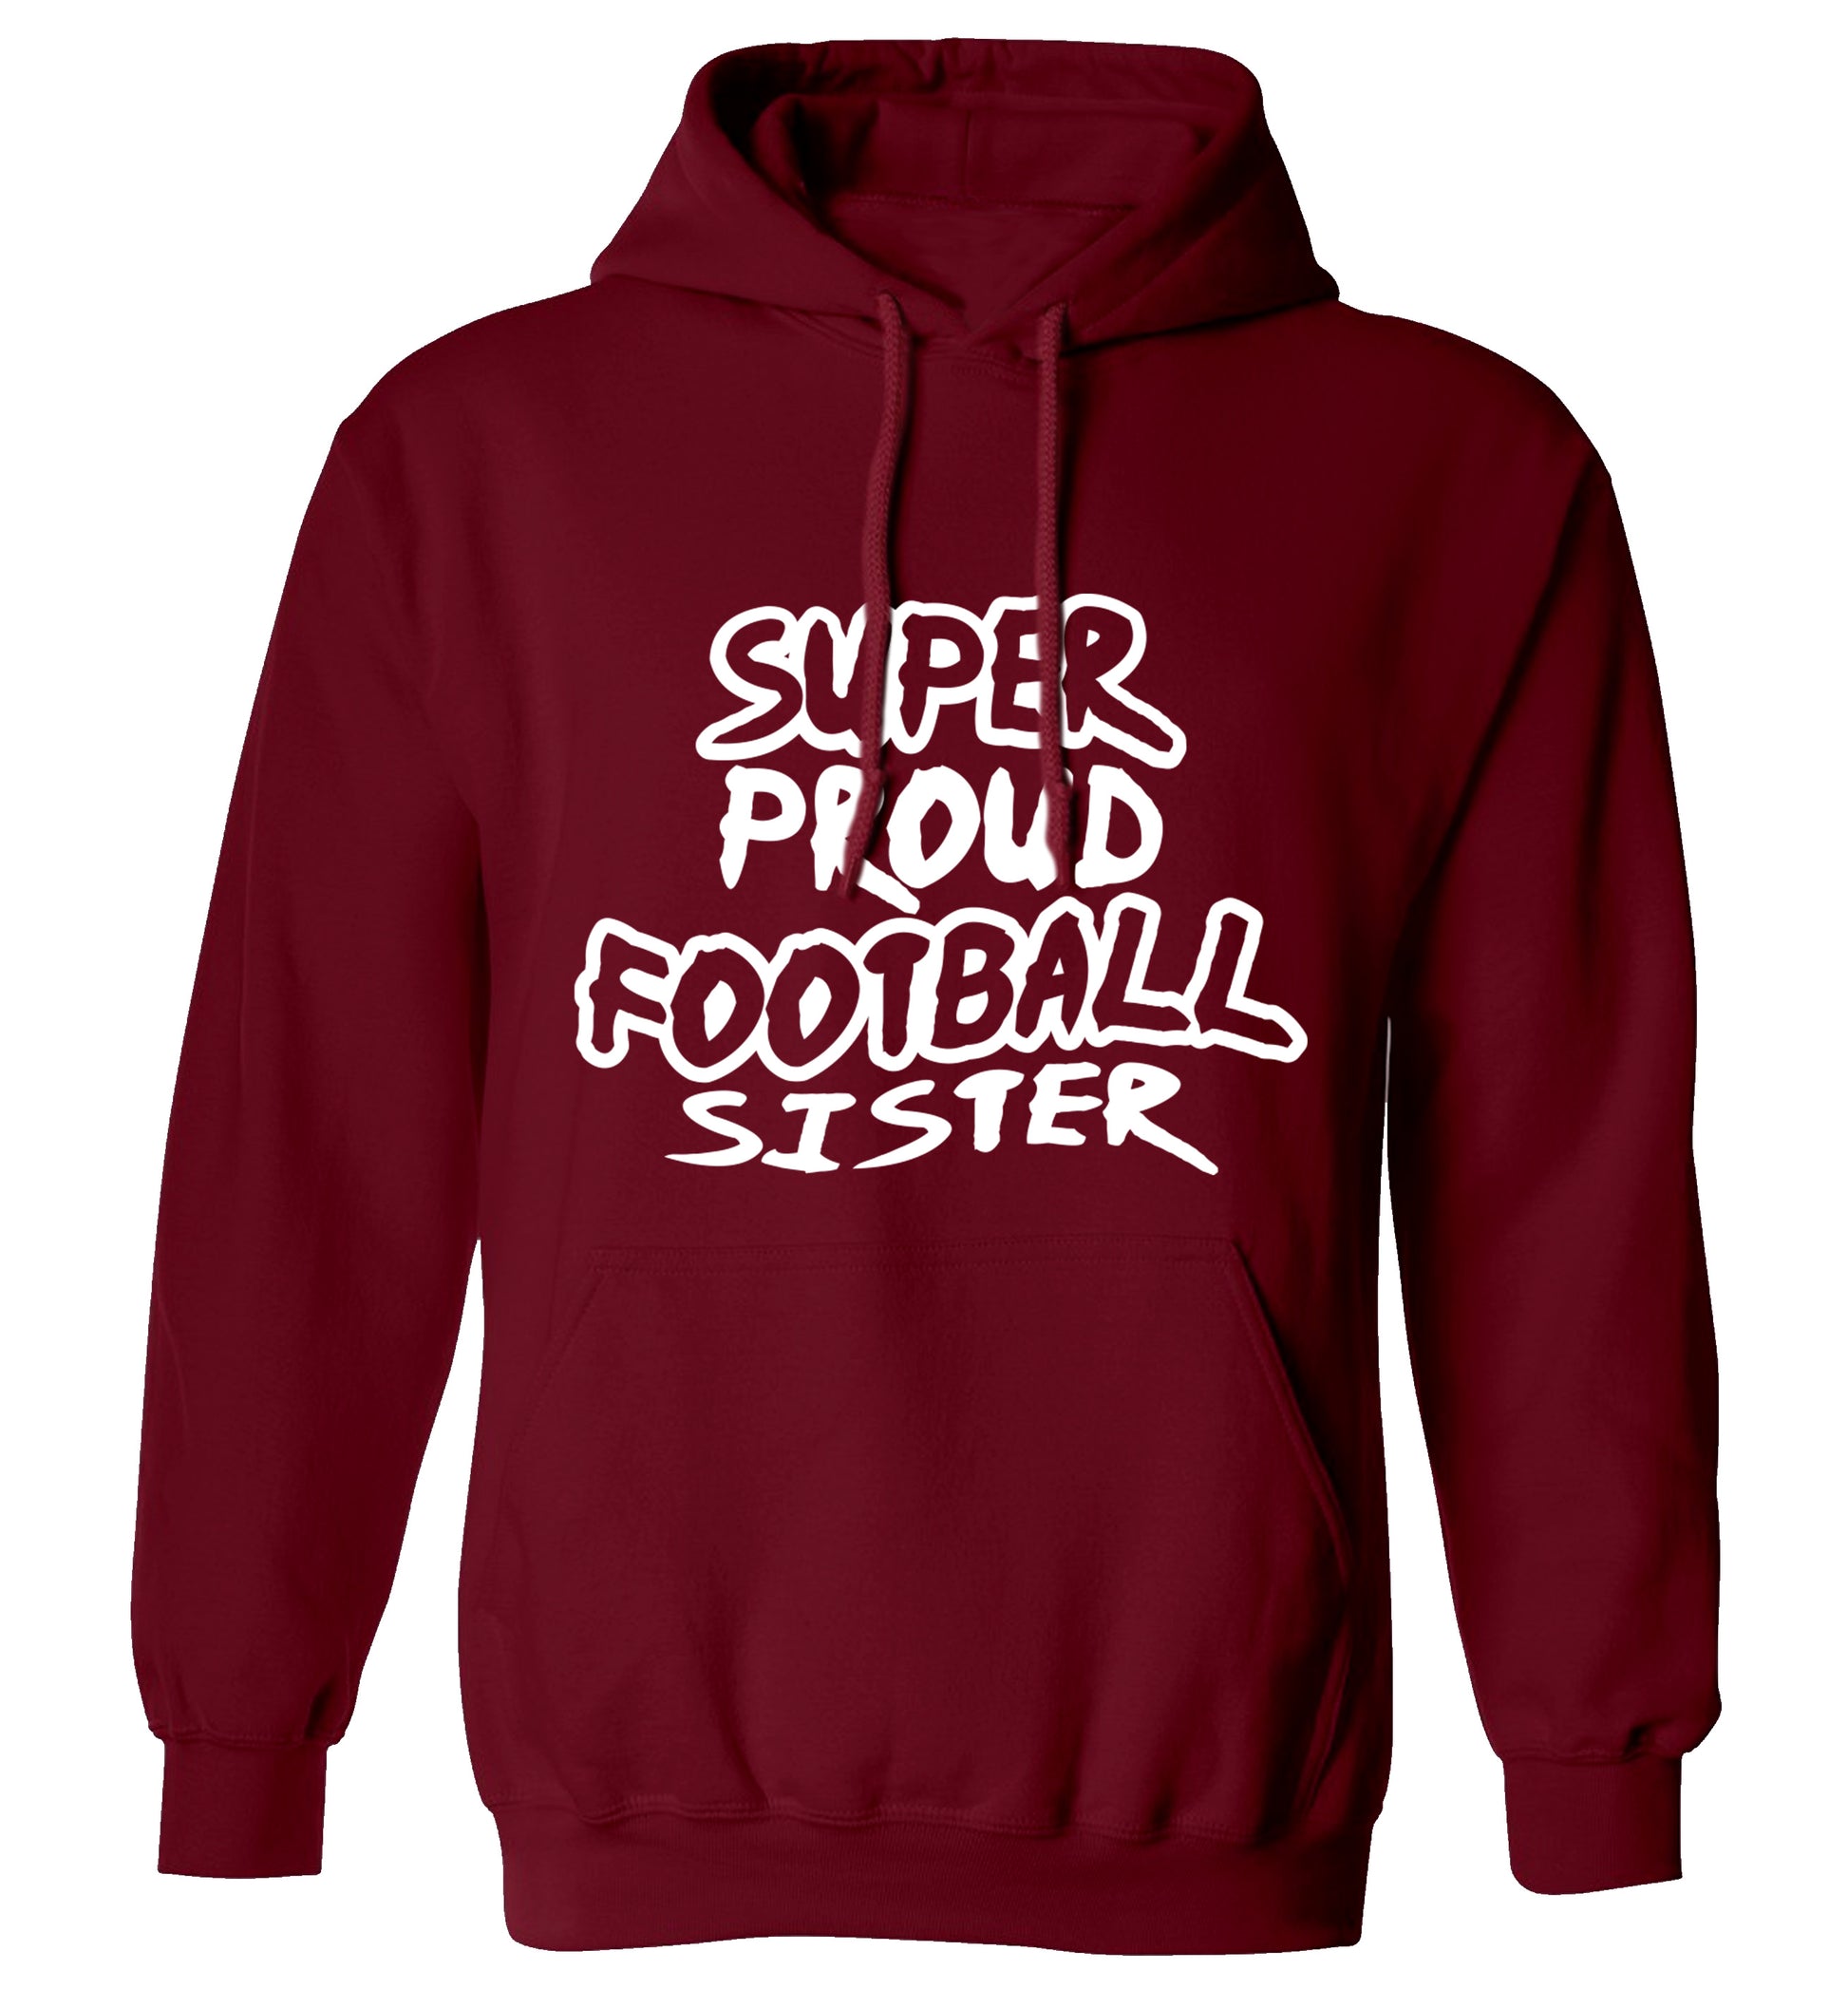 Super proud football sister adults unisexmaroon hoodie 2XL